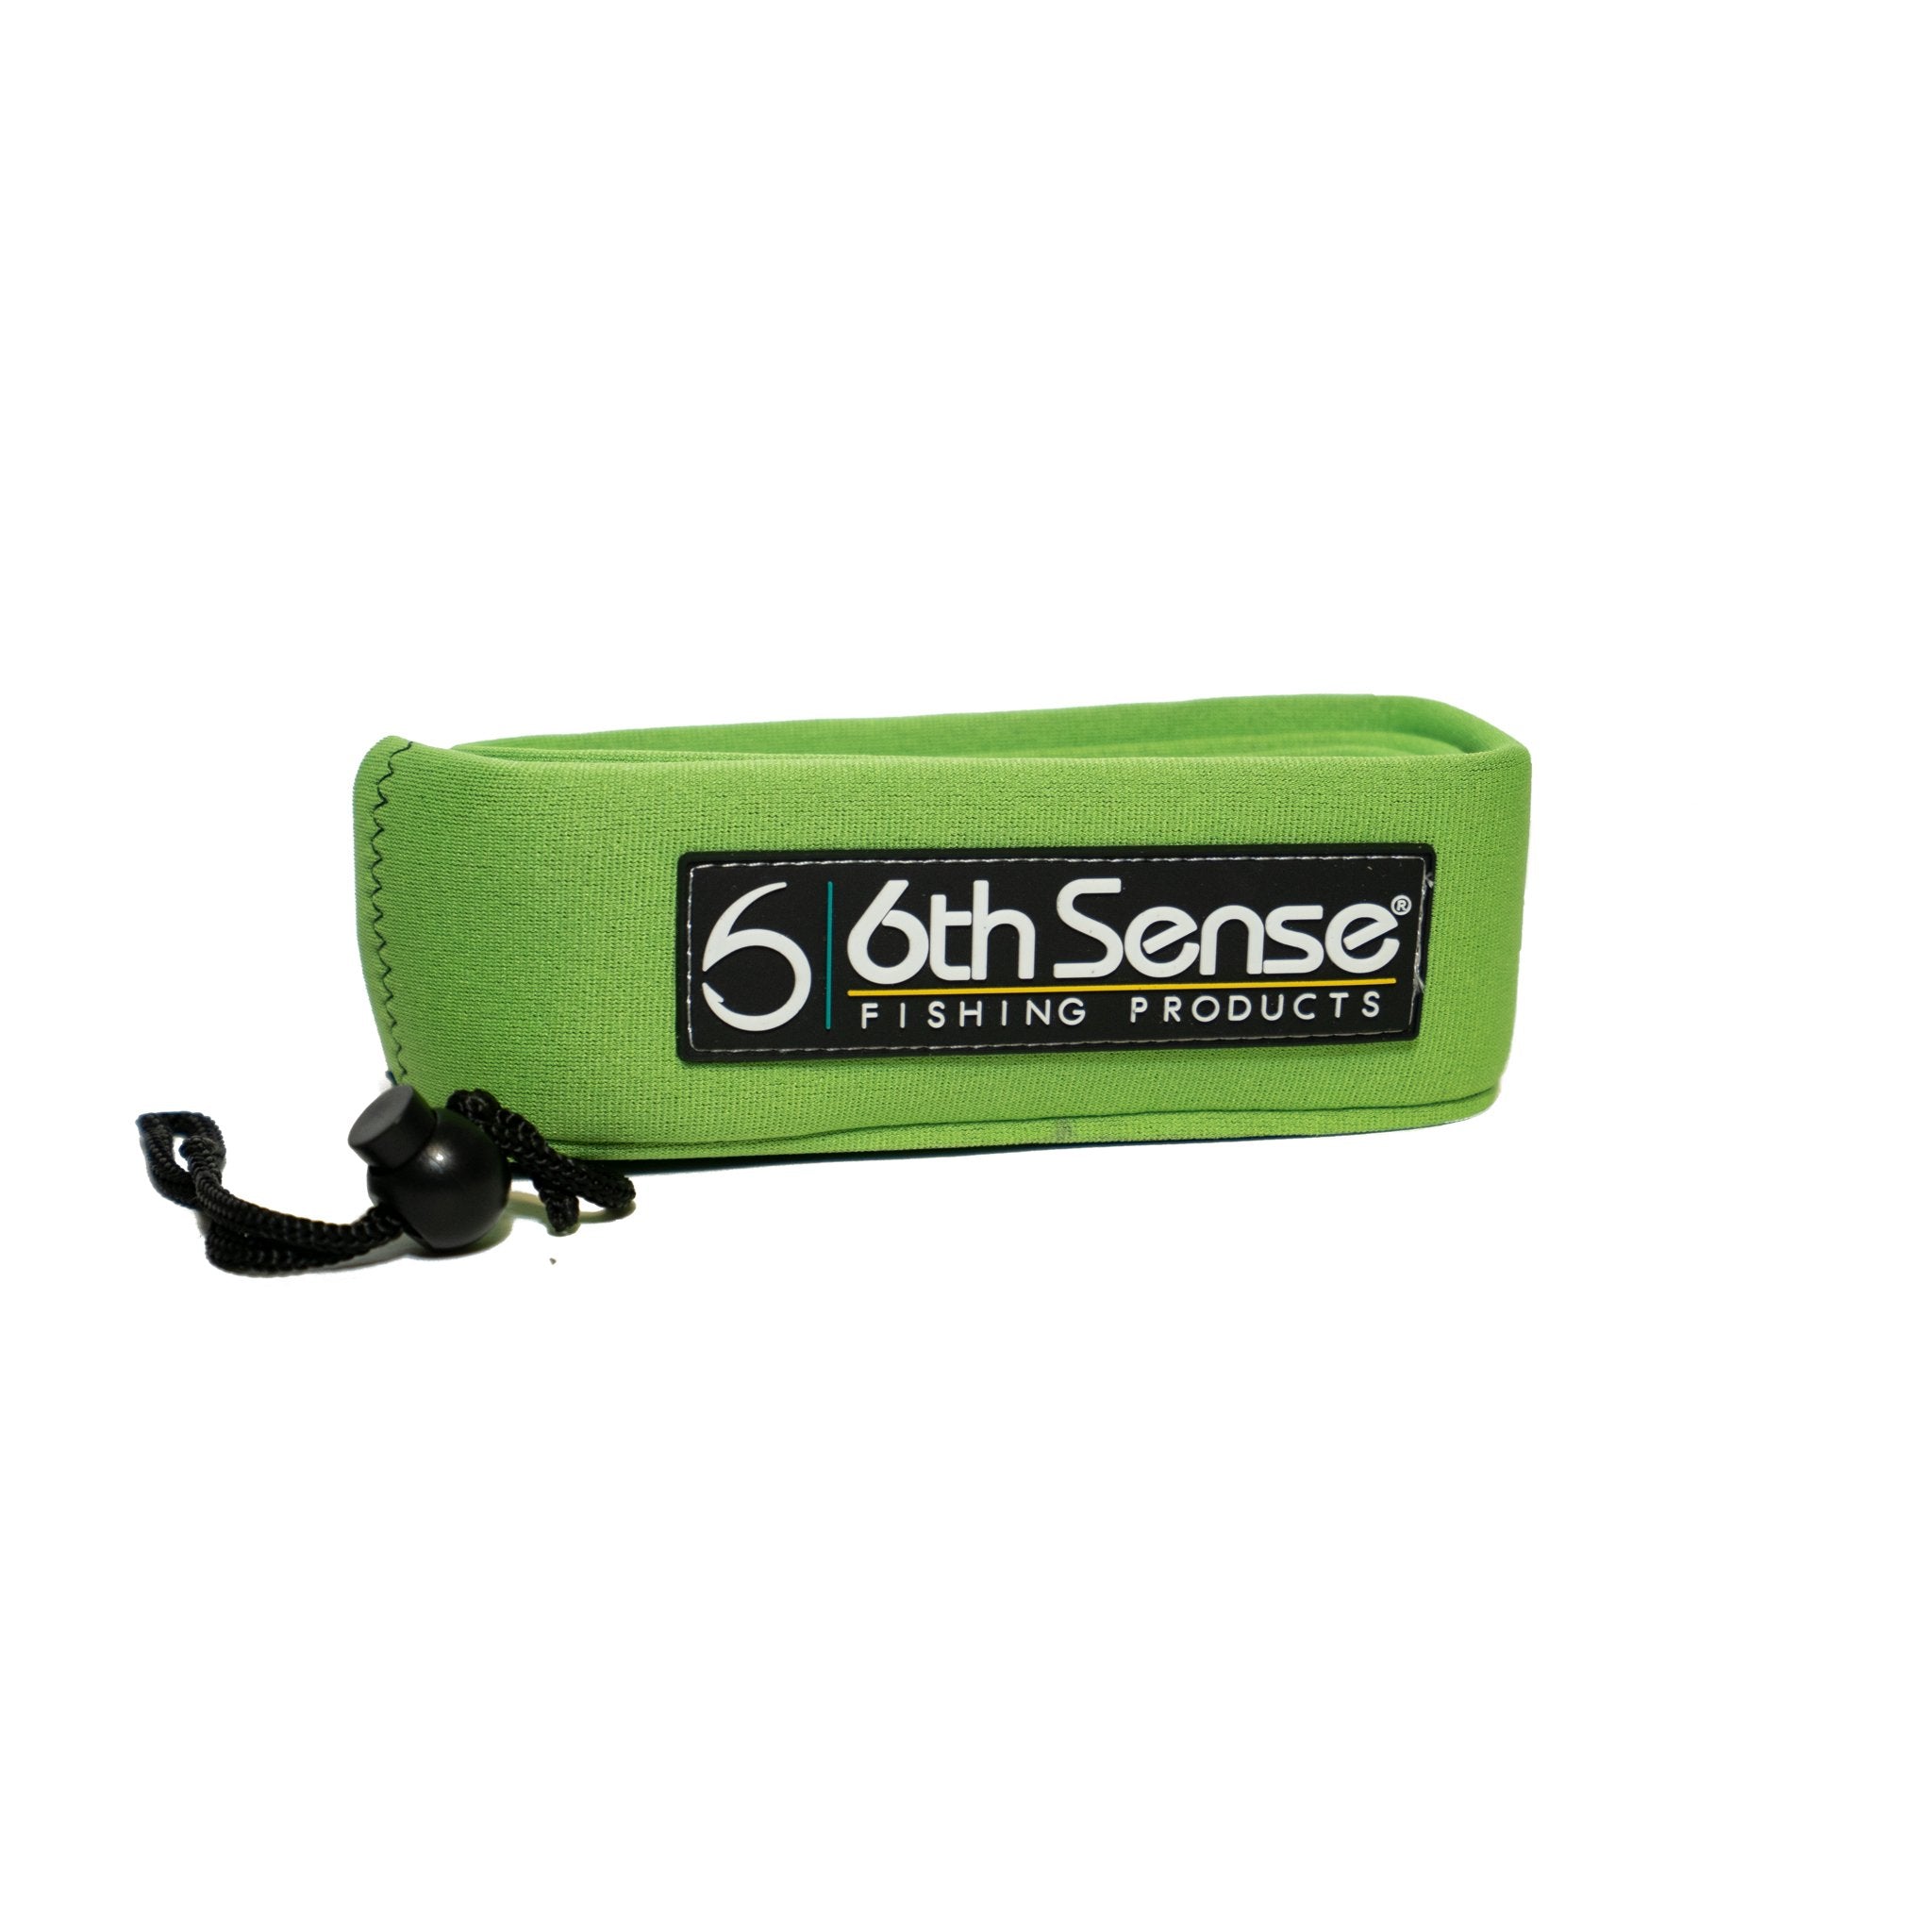 6th-sense-rod-sleeve-lime-green